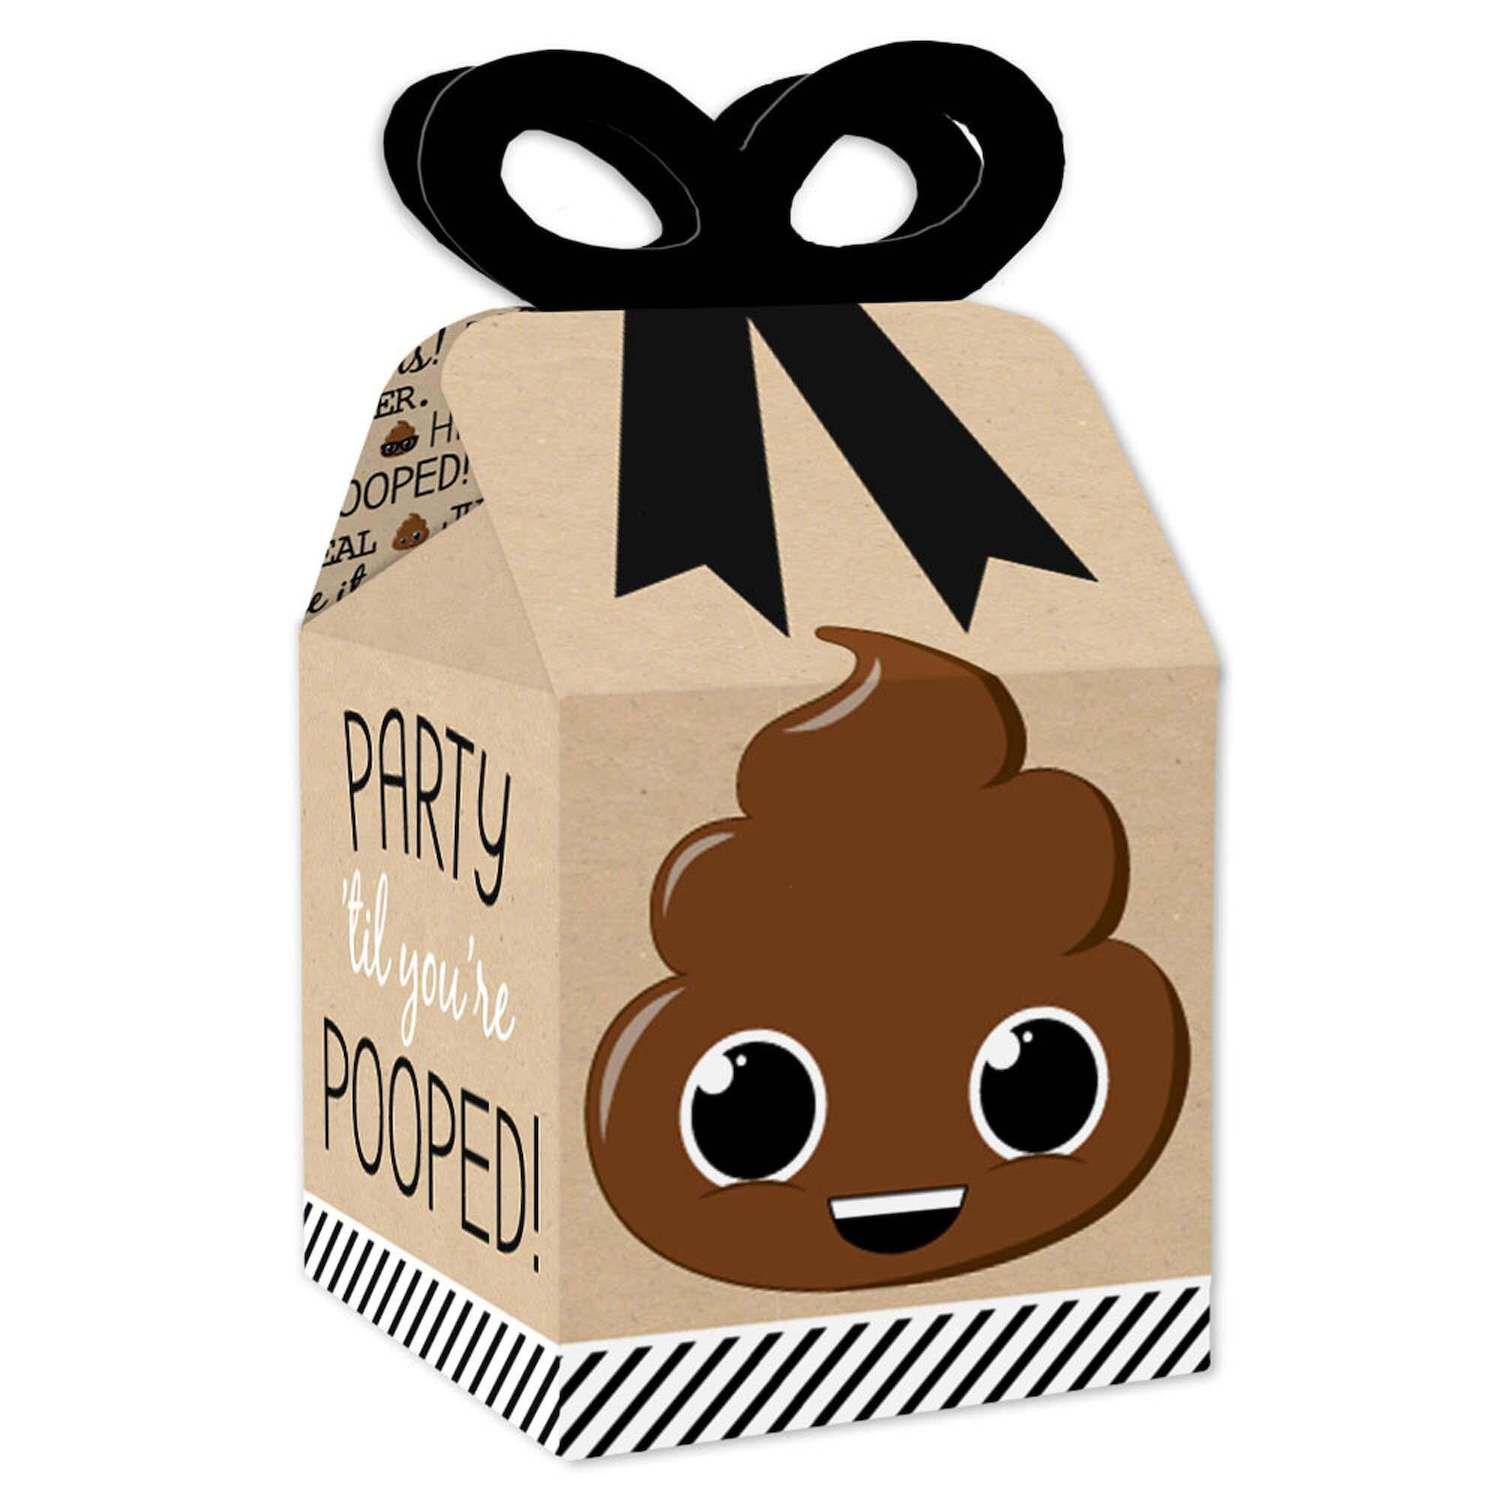 Big Dot of Happiness Pajama Slumber Party - Girls Sleepover Birthday Party  Favor Popcorn Treat Boxes - Set of 12 